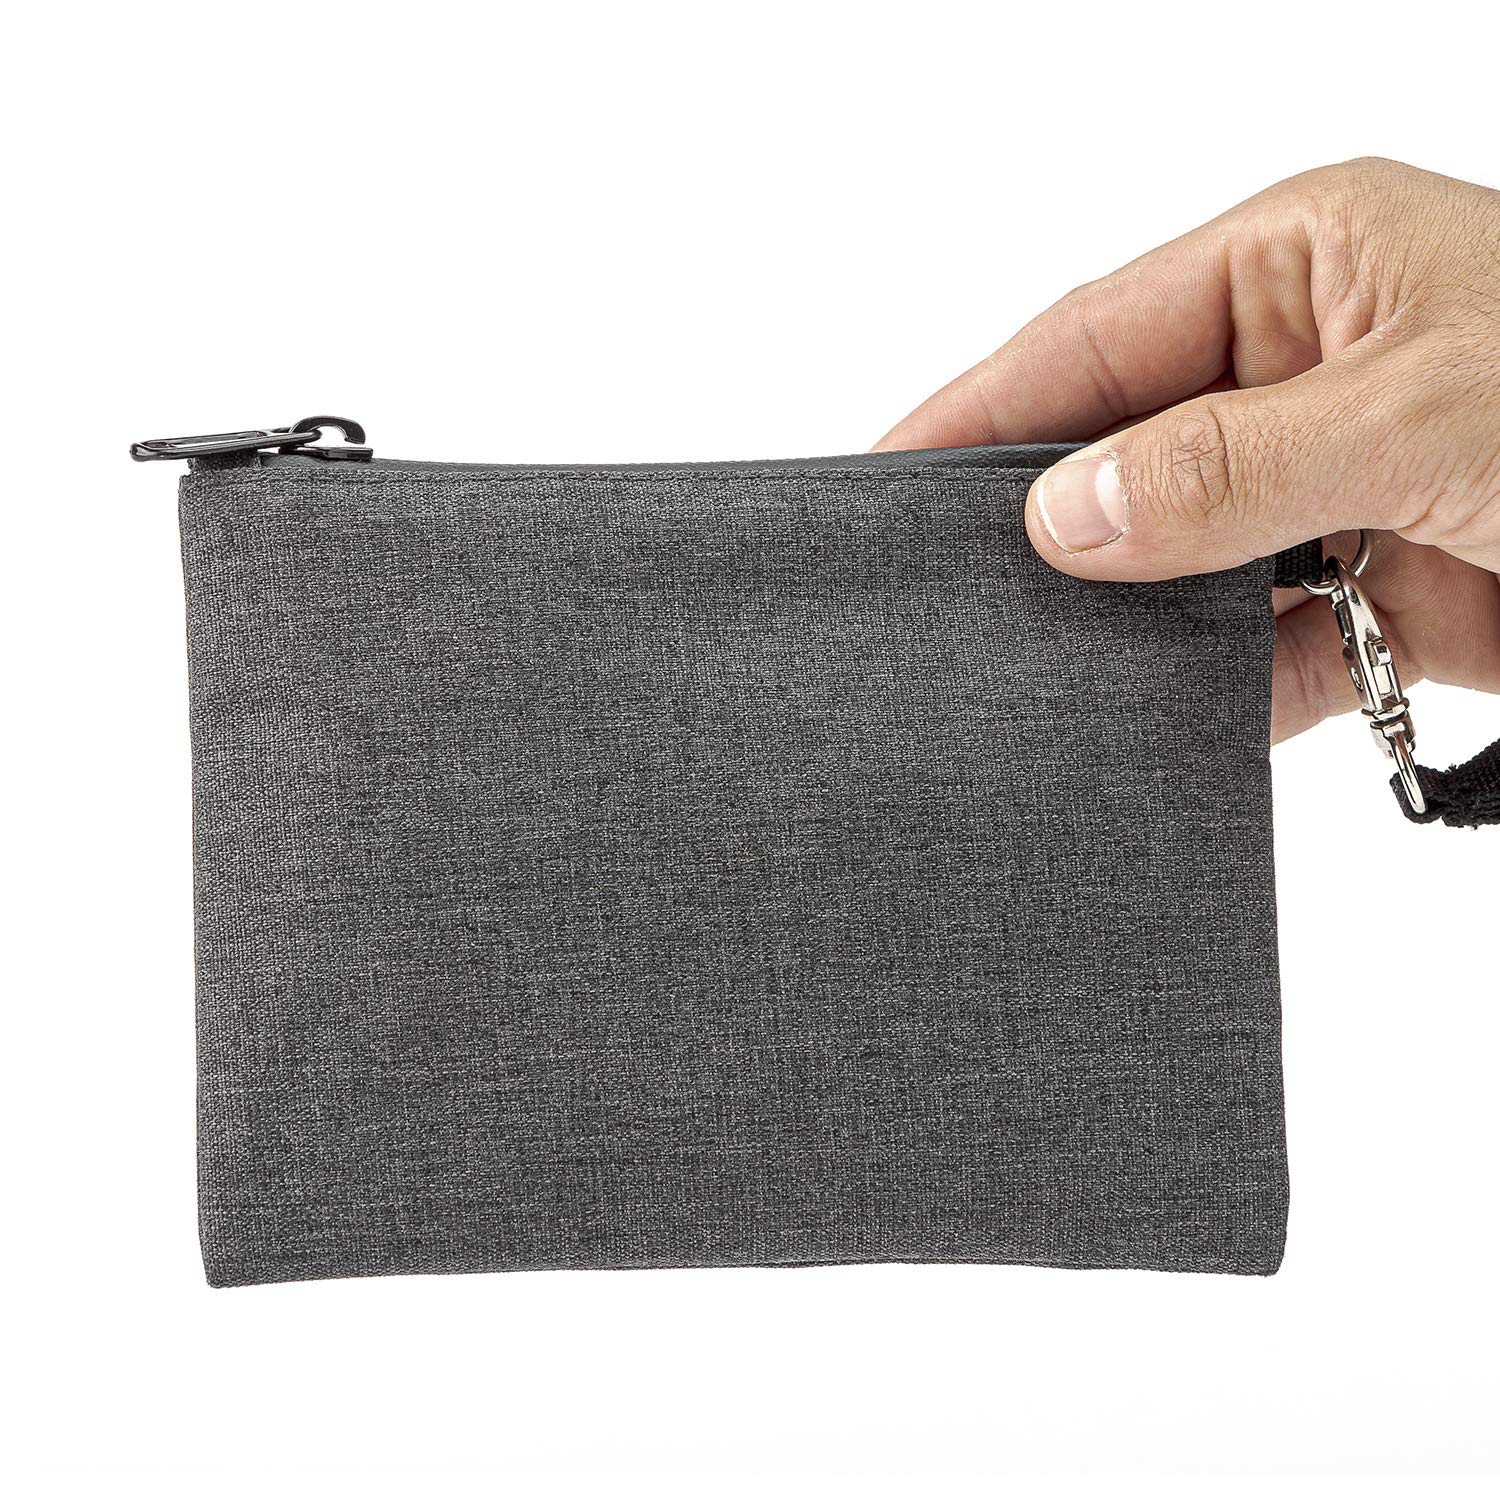 Smell Proof Bags Portable Travel Storage Bag Smell Proof Bag Odor